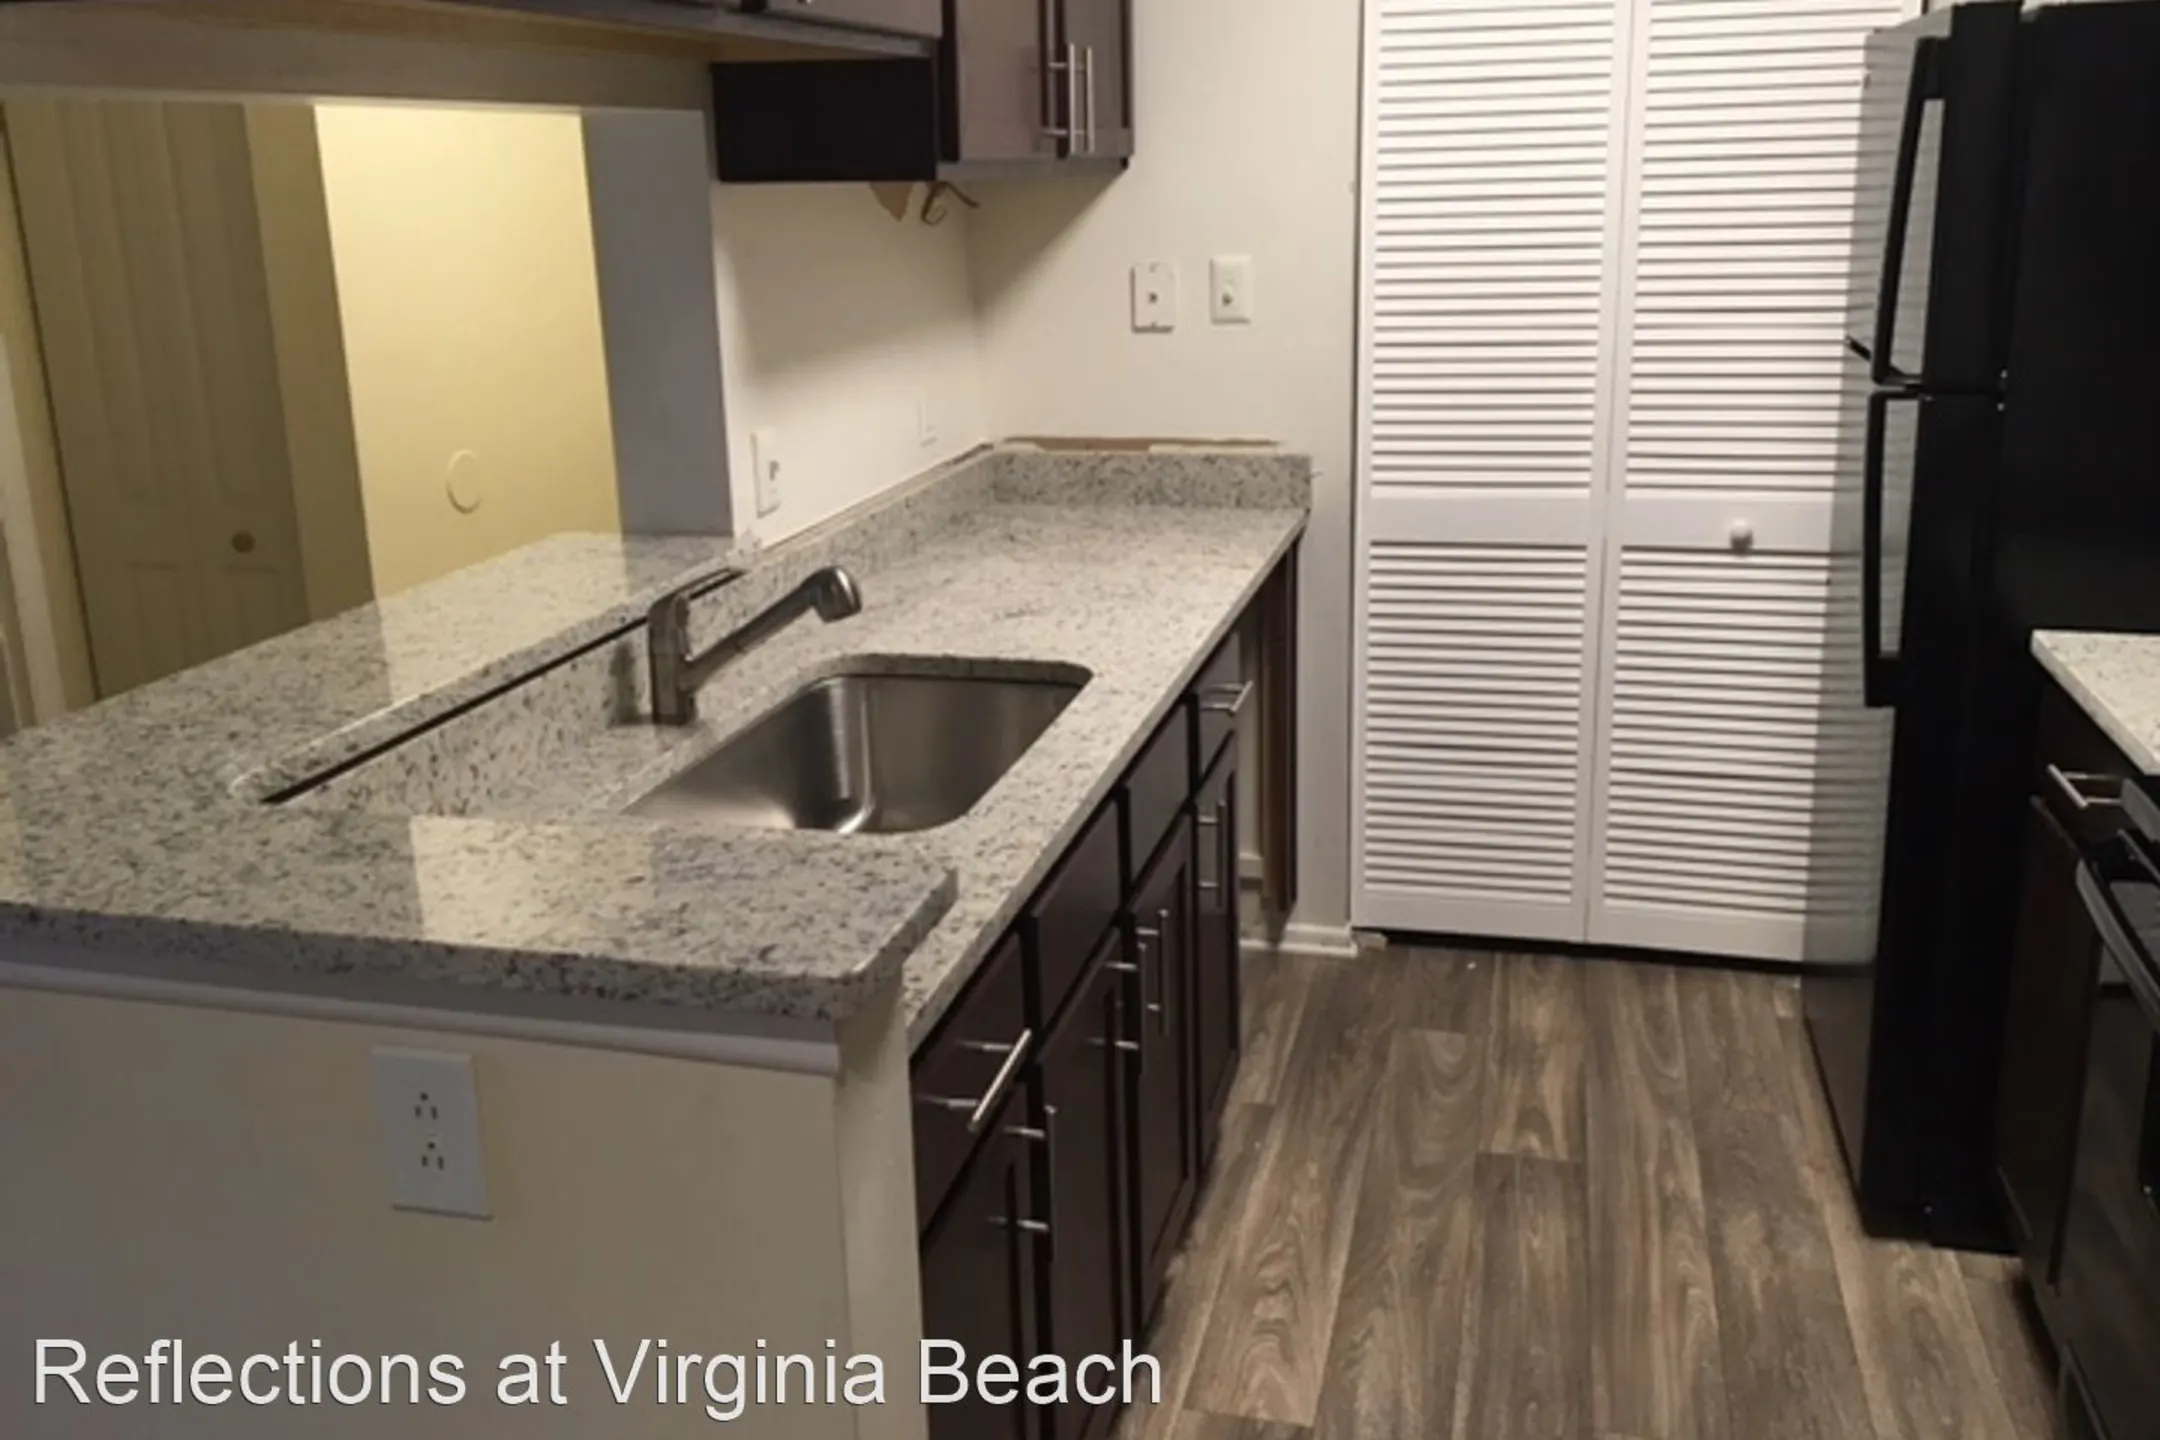 Kitchen - Reflections at Virginia Beach - Virginia Beach, VA